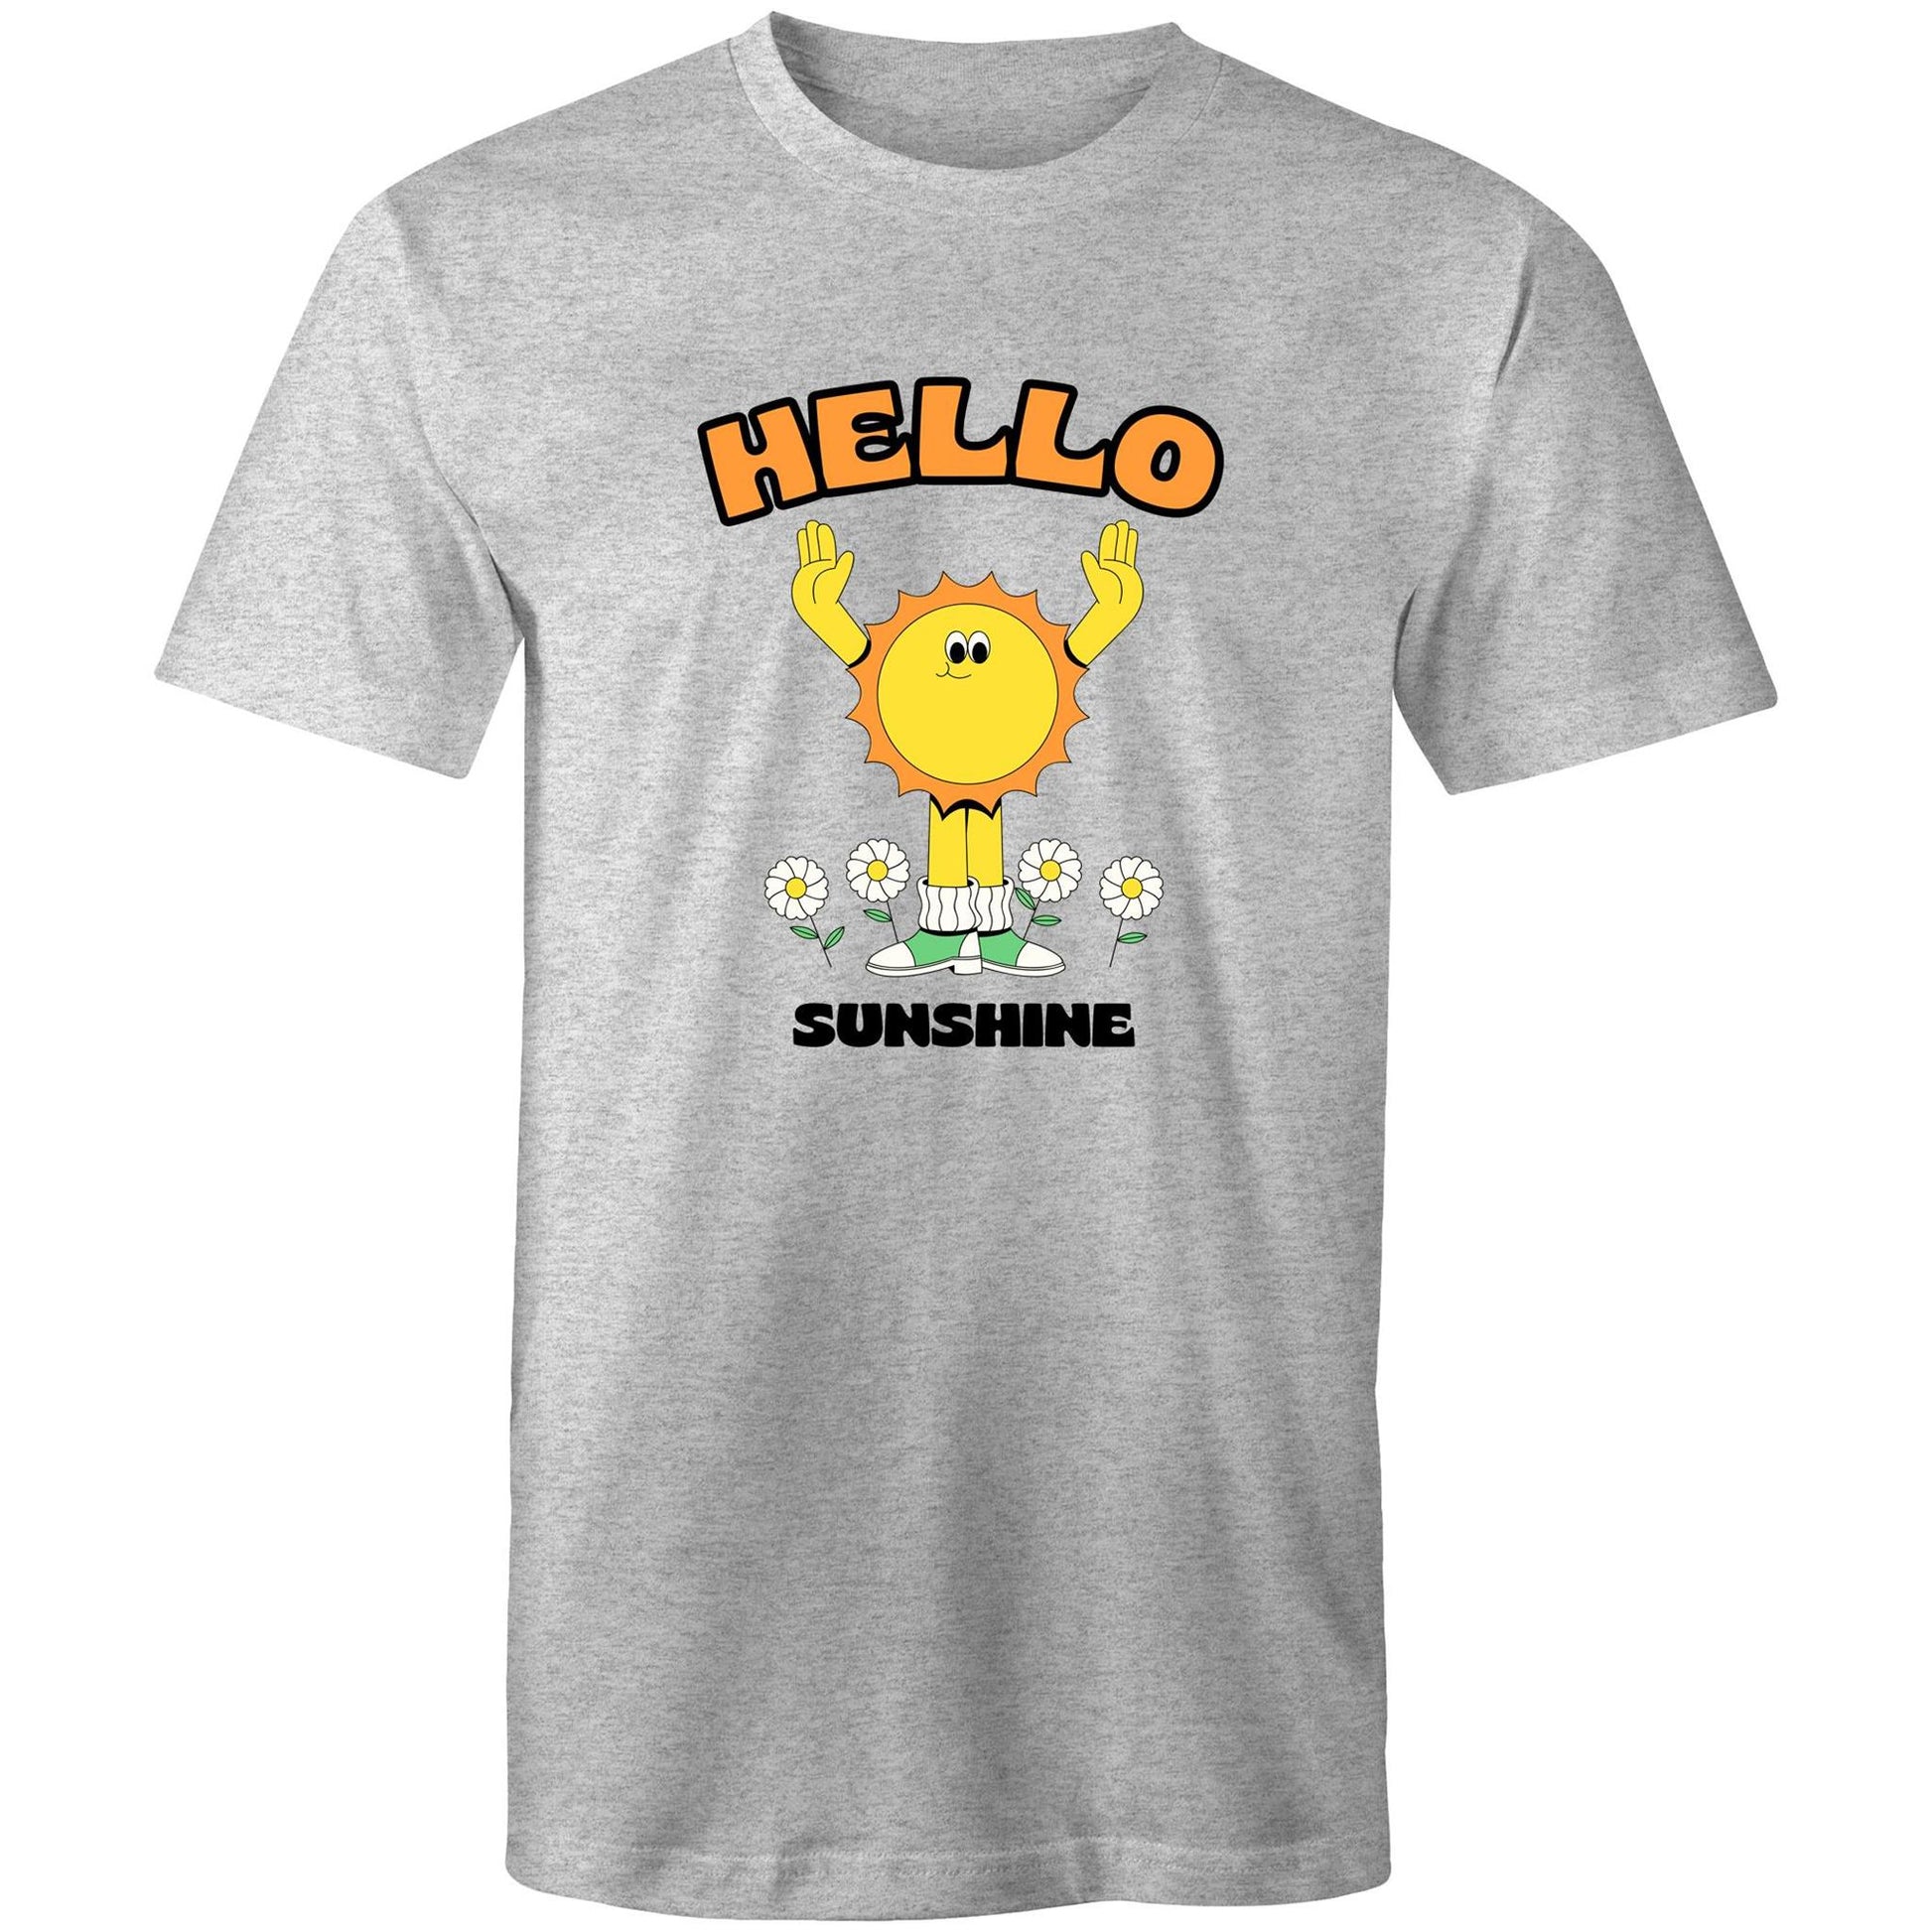 Hello Sunshine - Mens T-Shirt Grey Marle Mens T-shirt Retro Summer